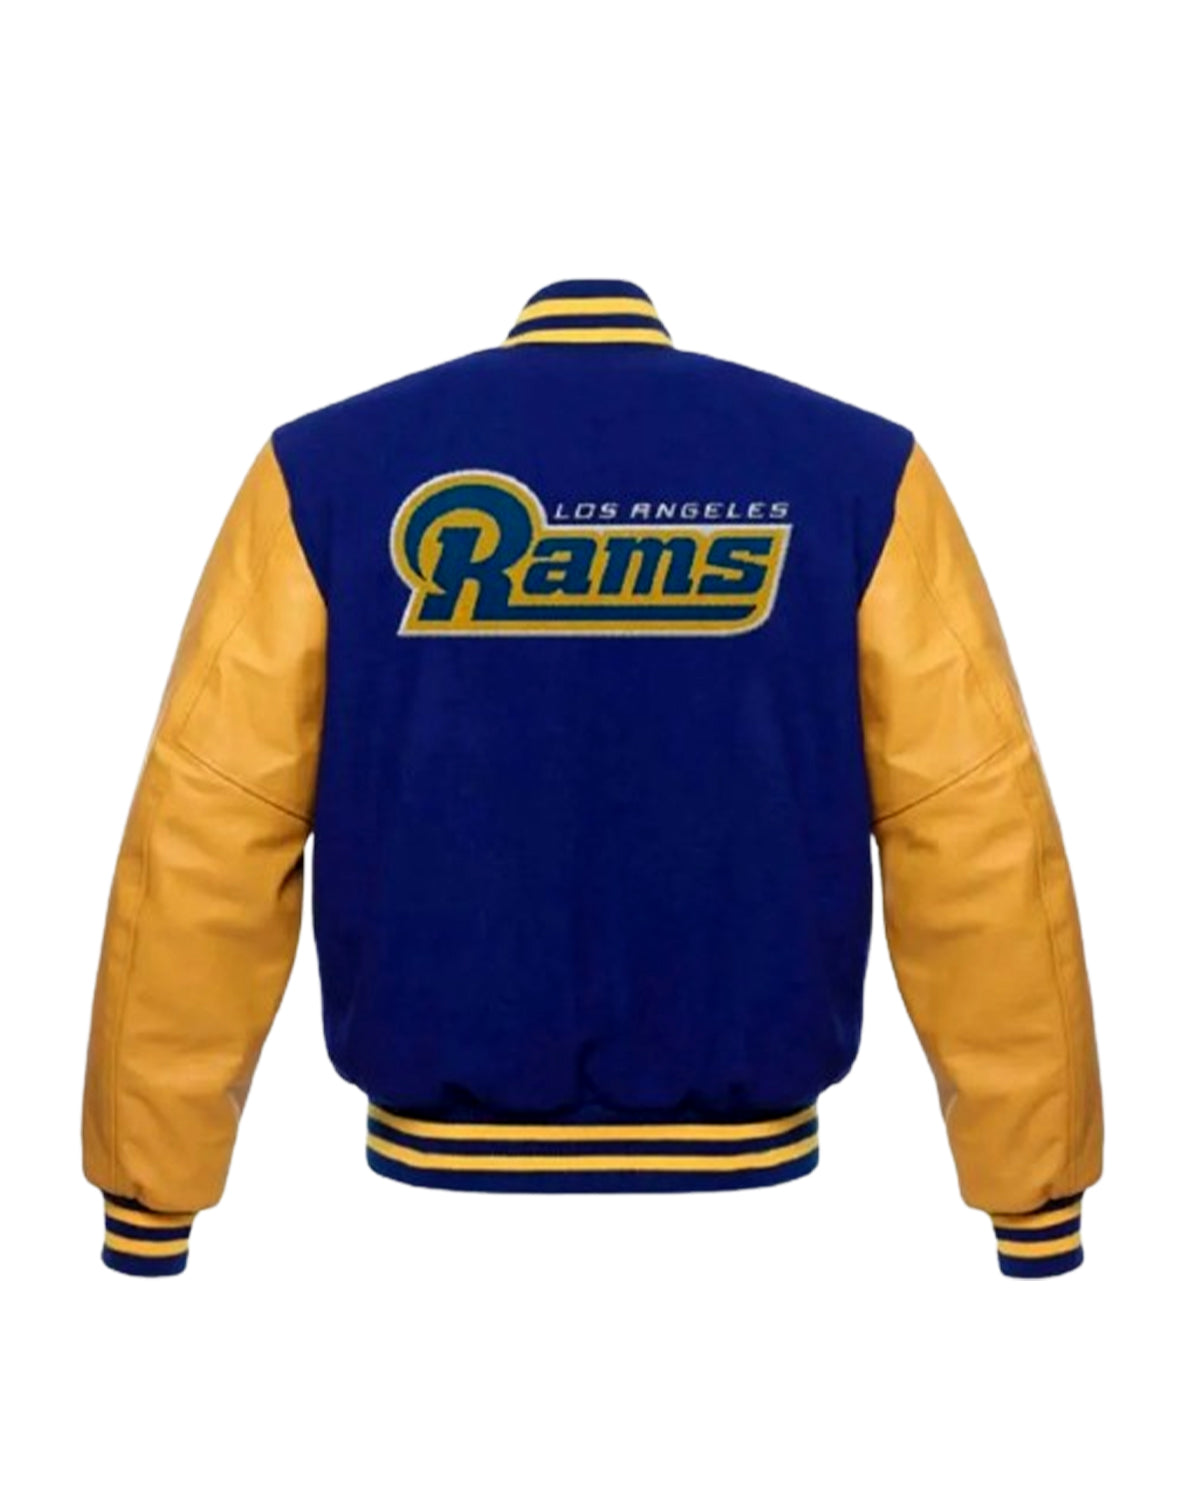 Mens LA Los Angeles Rams Letterman Varsity Jacket